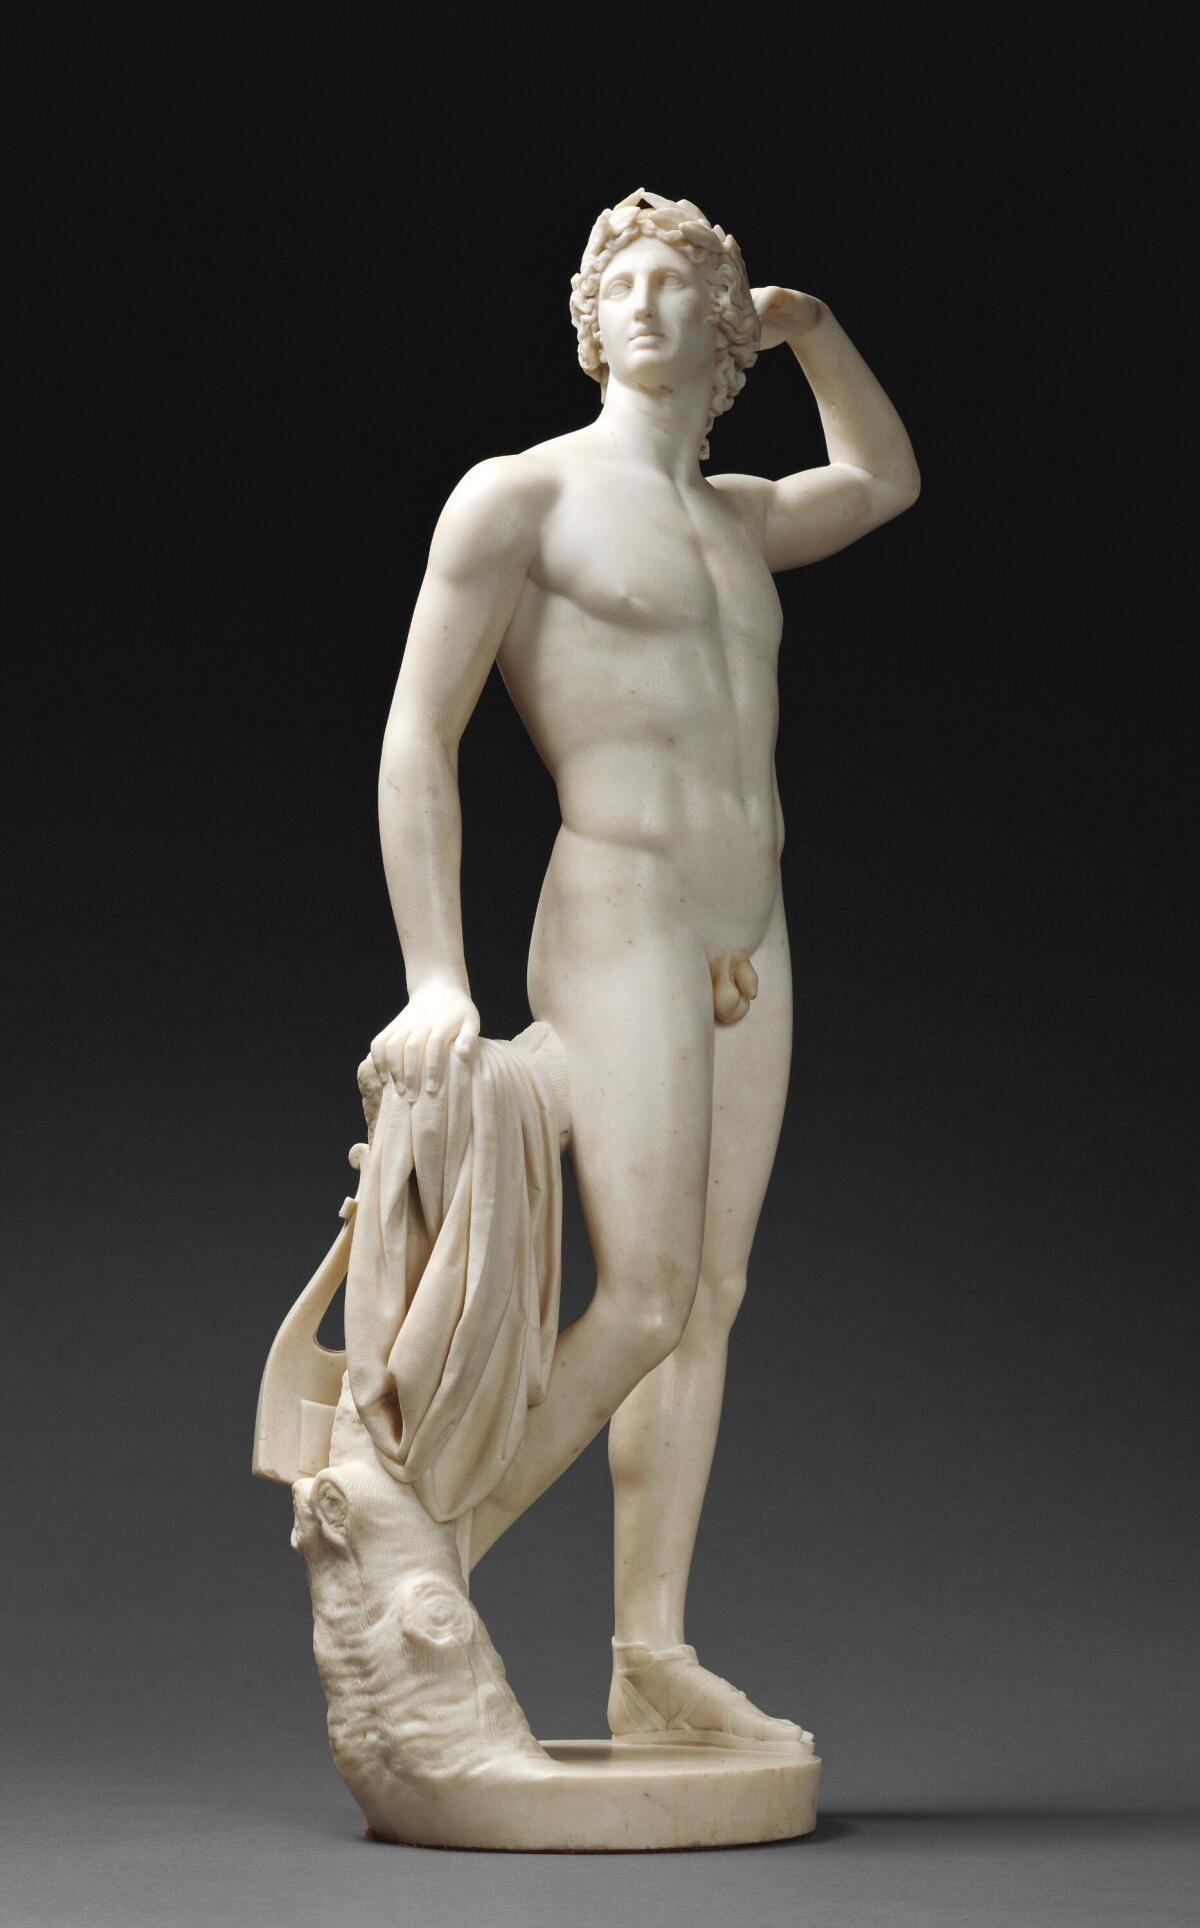 Antonio Canova, “Apollo Crowning Himself,” 1781-82, marble